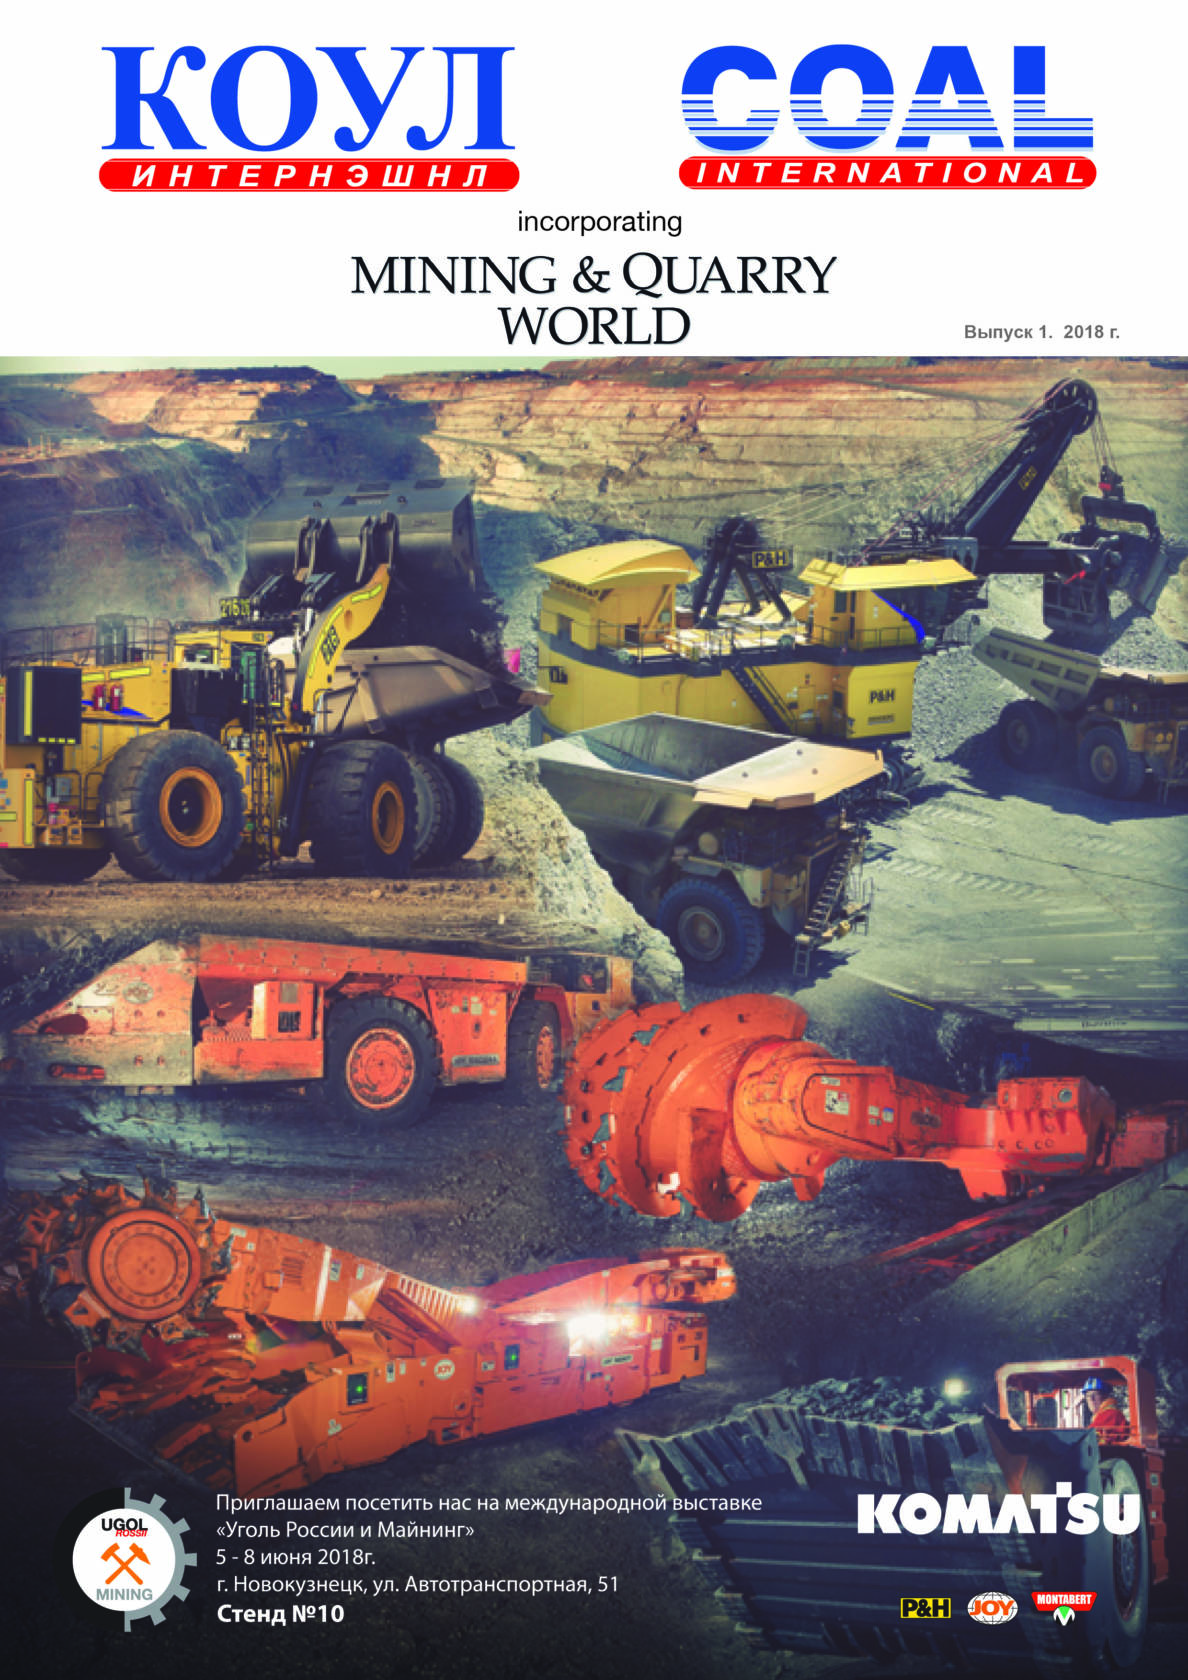 Russian Coal International/Mining & Quarry World 2018